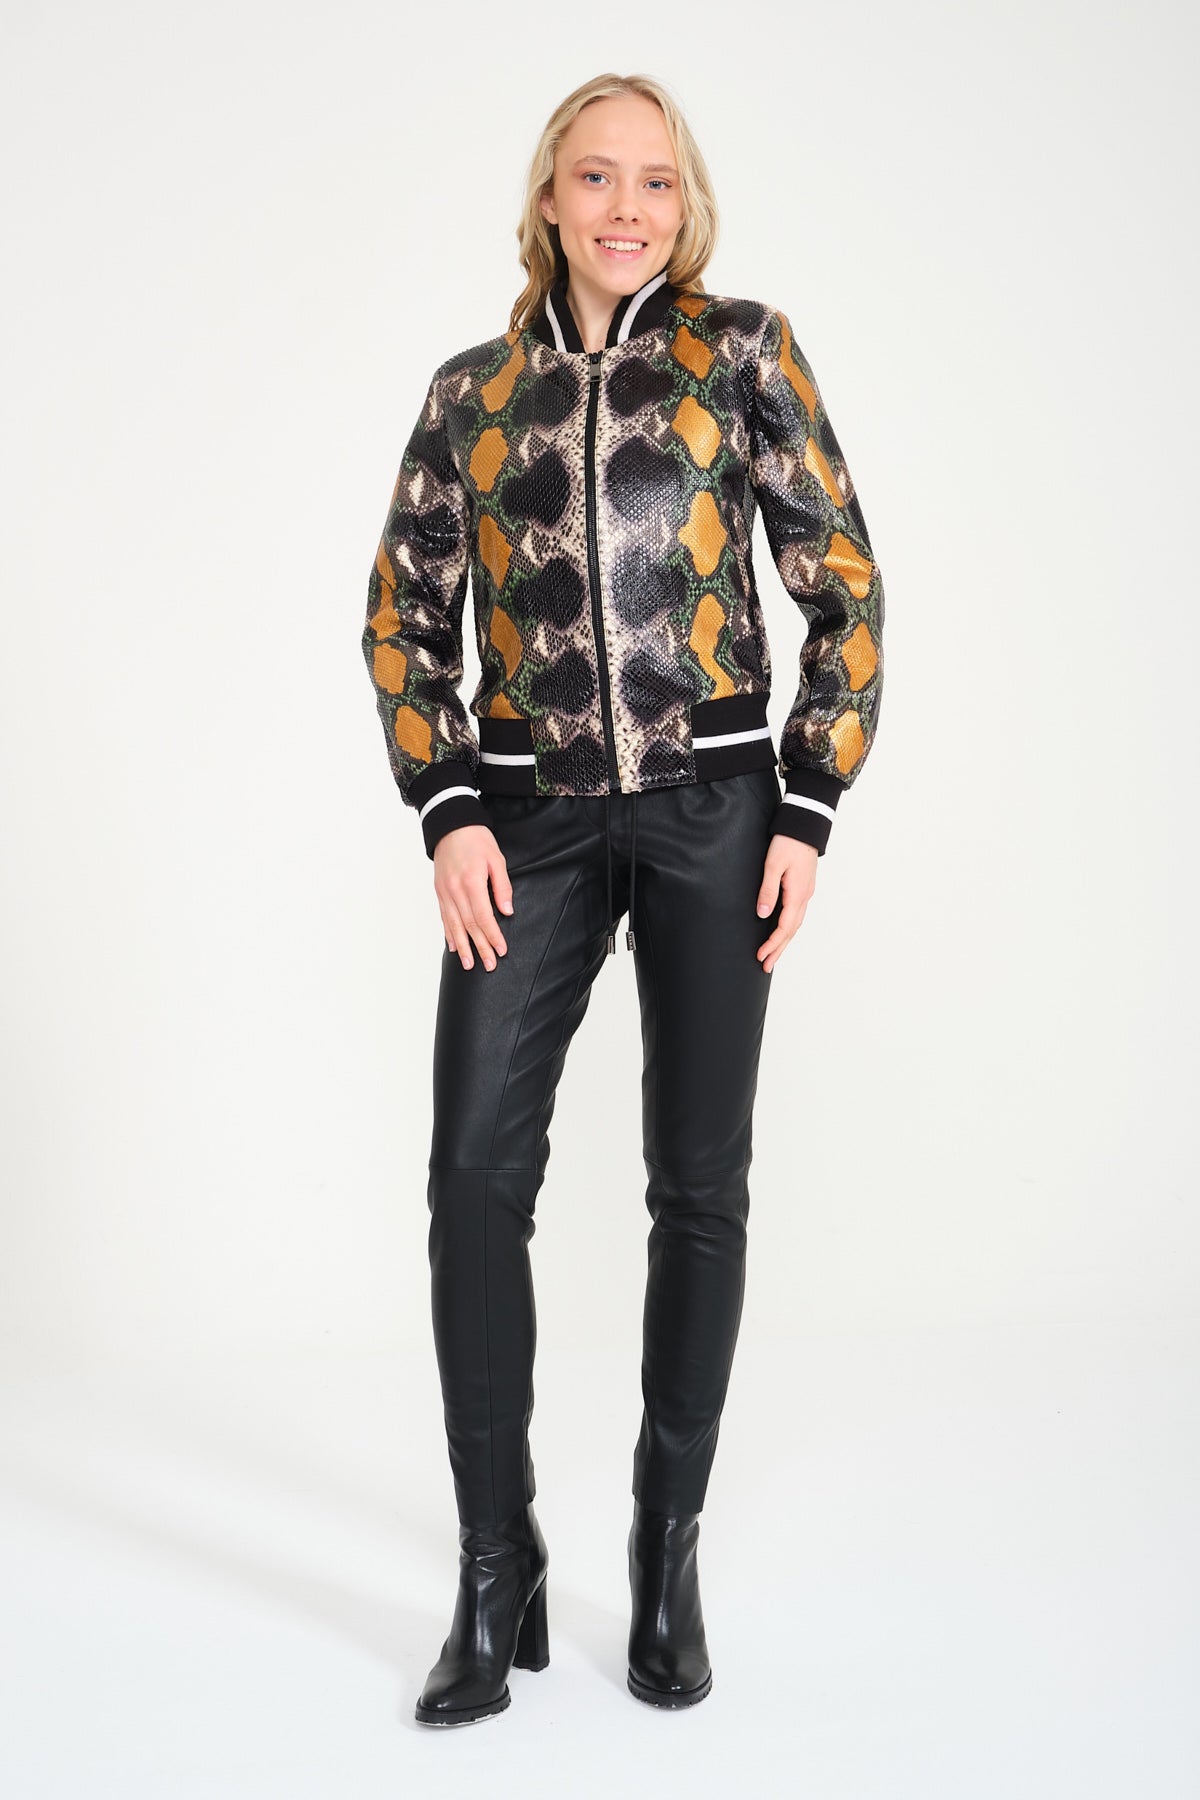 Multicolored Python Leather Jacket